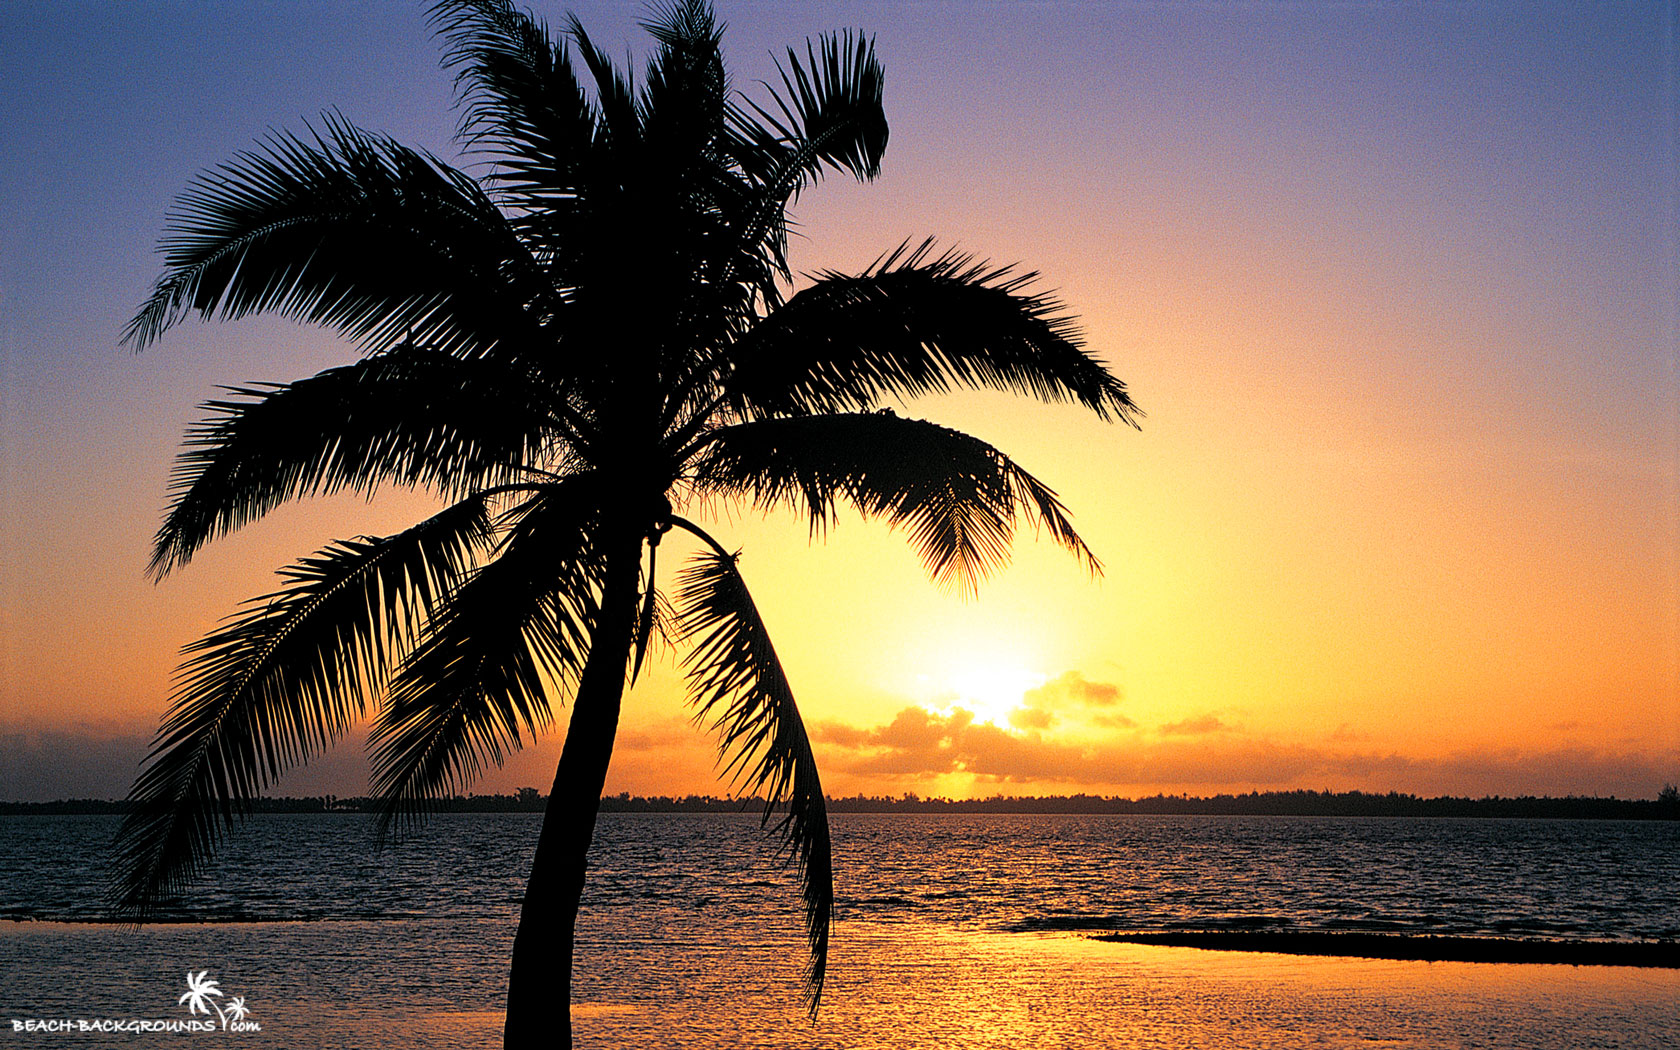 orange sunset on the tropic beach background 16802151050